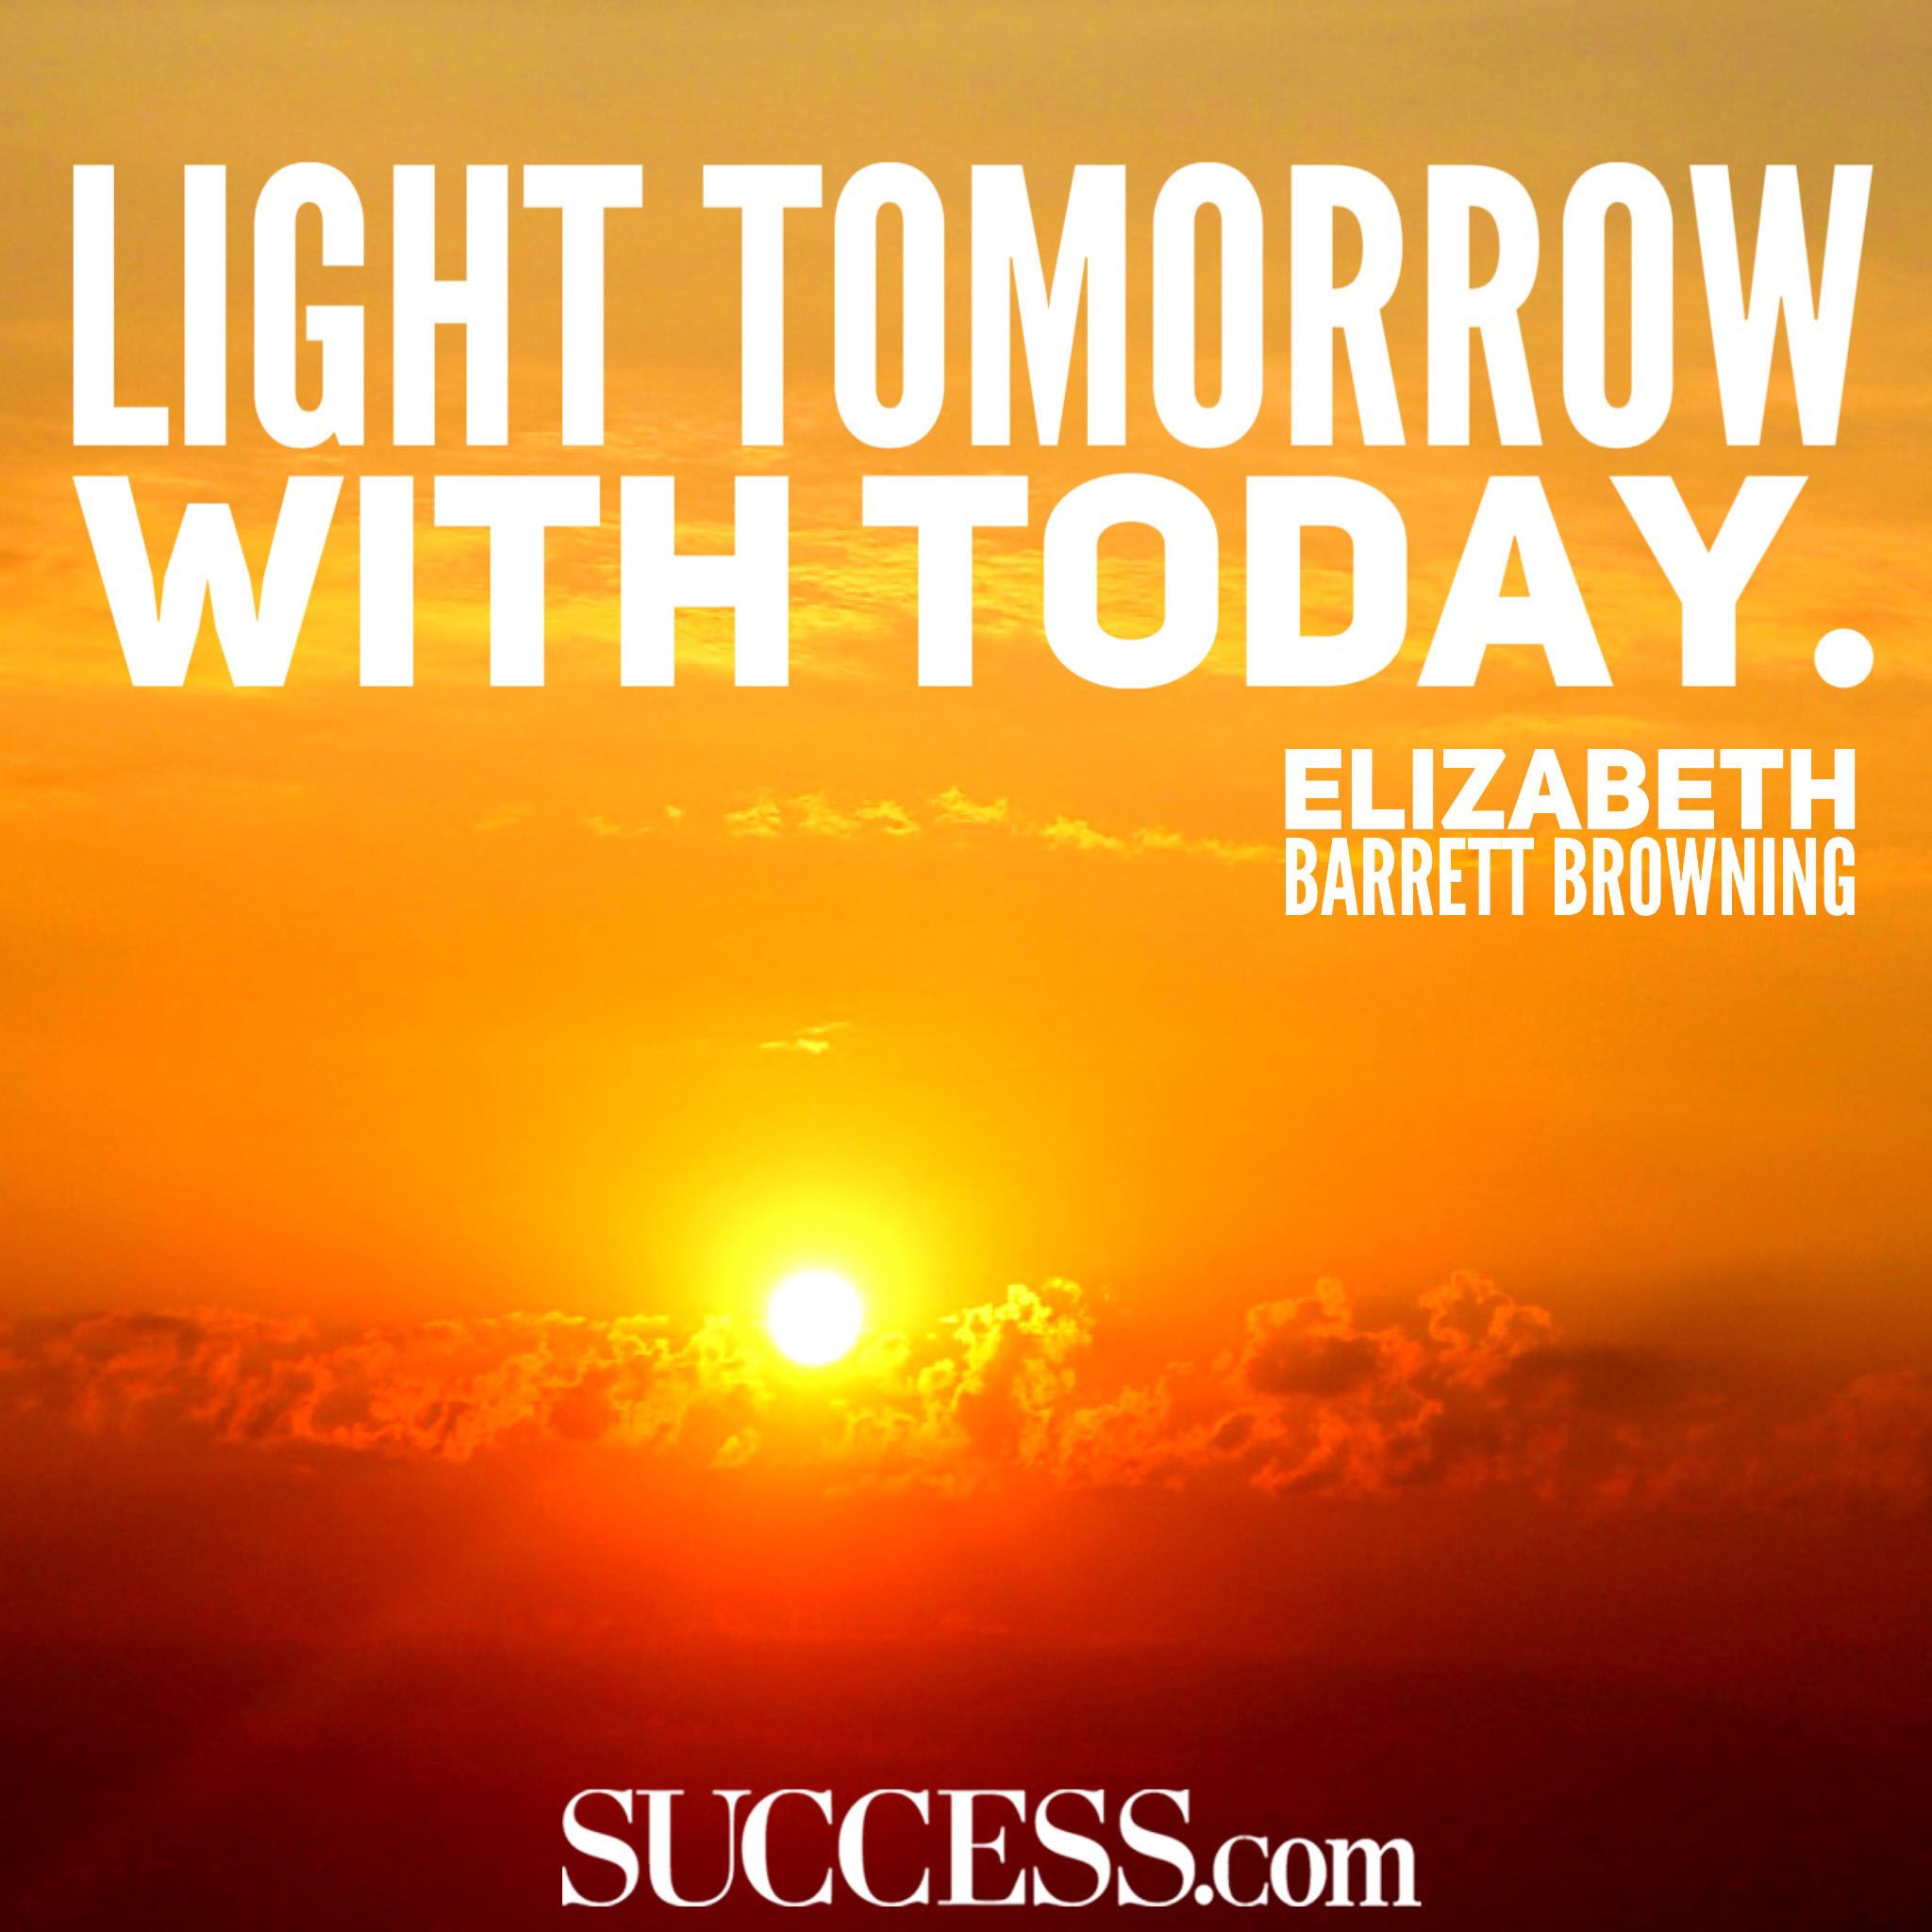 Light-tomorrow-with-today.-Elizabethe-Barrett-Browning.jpg